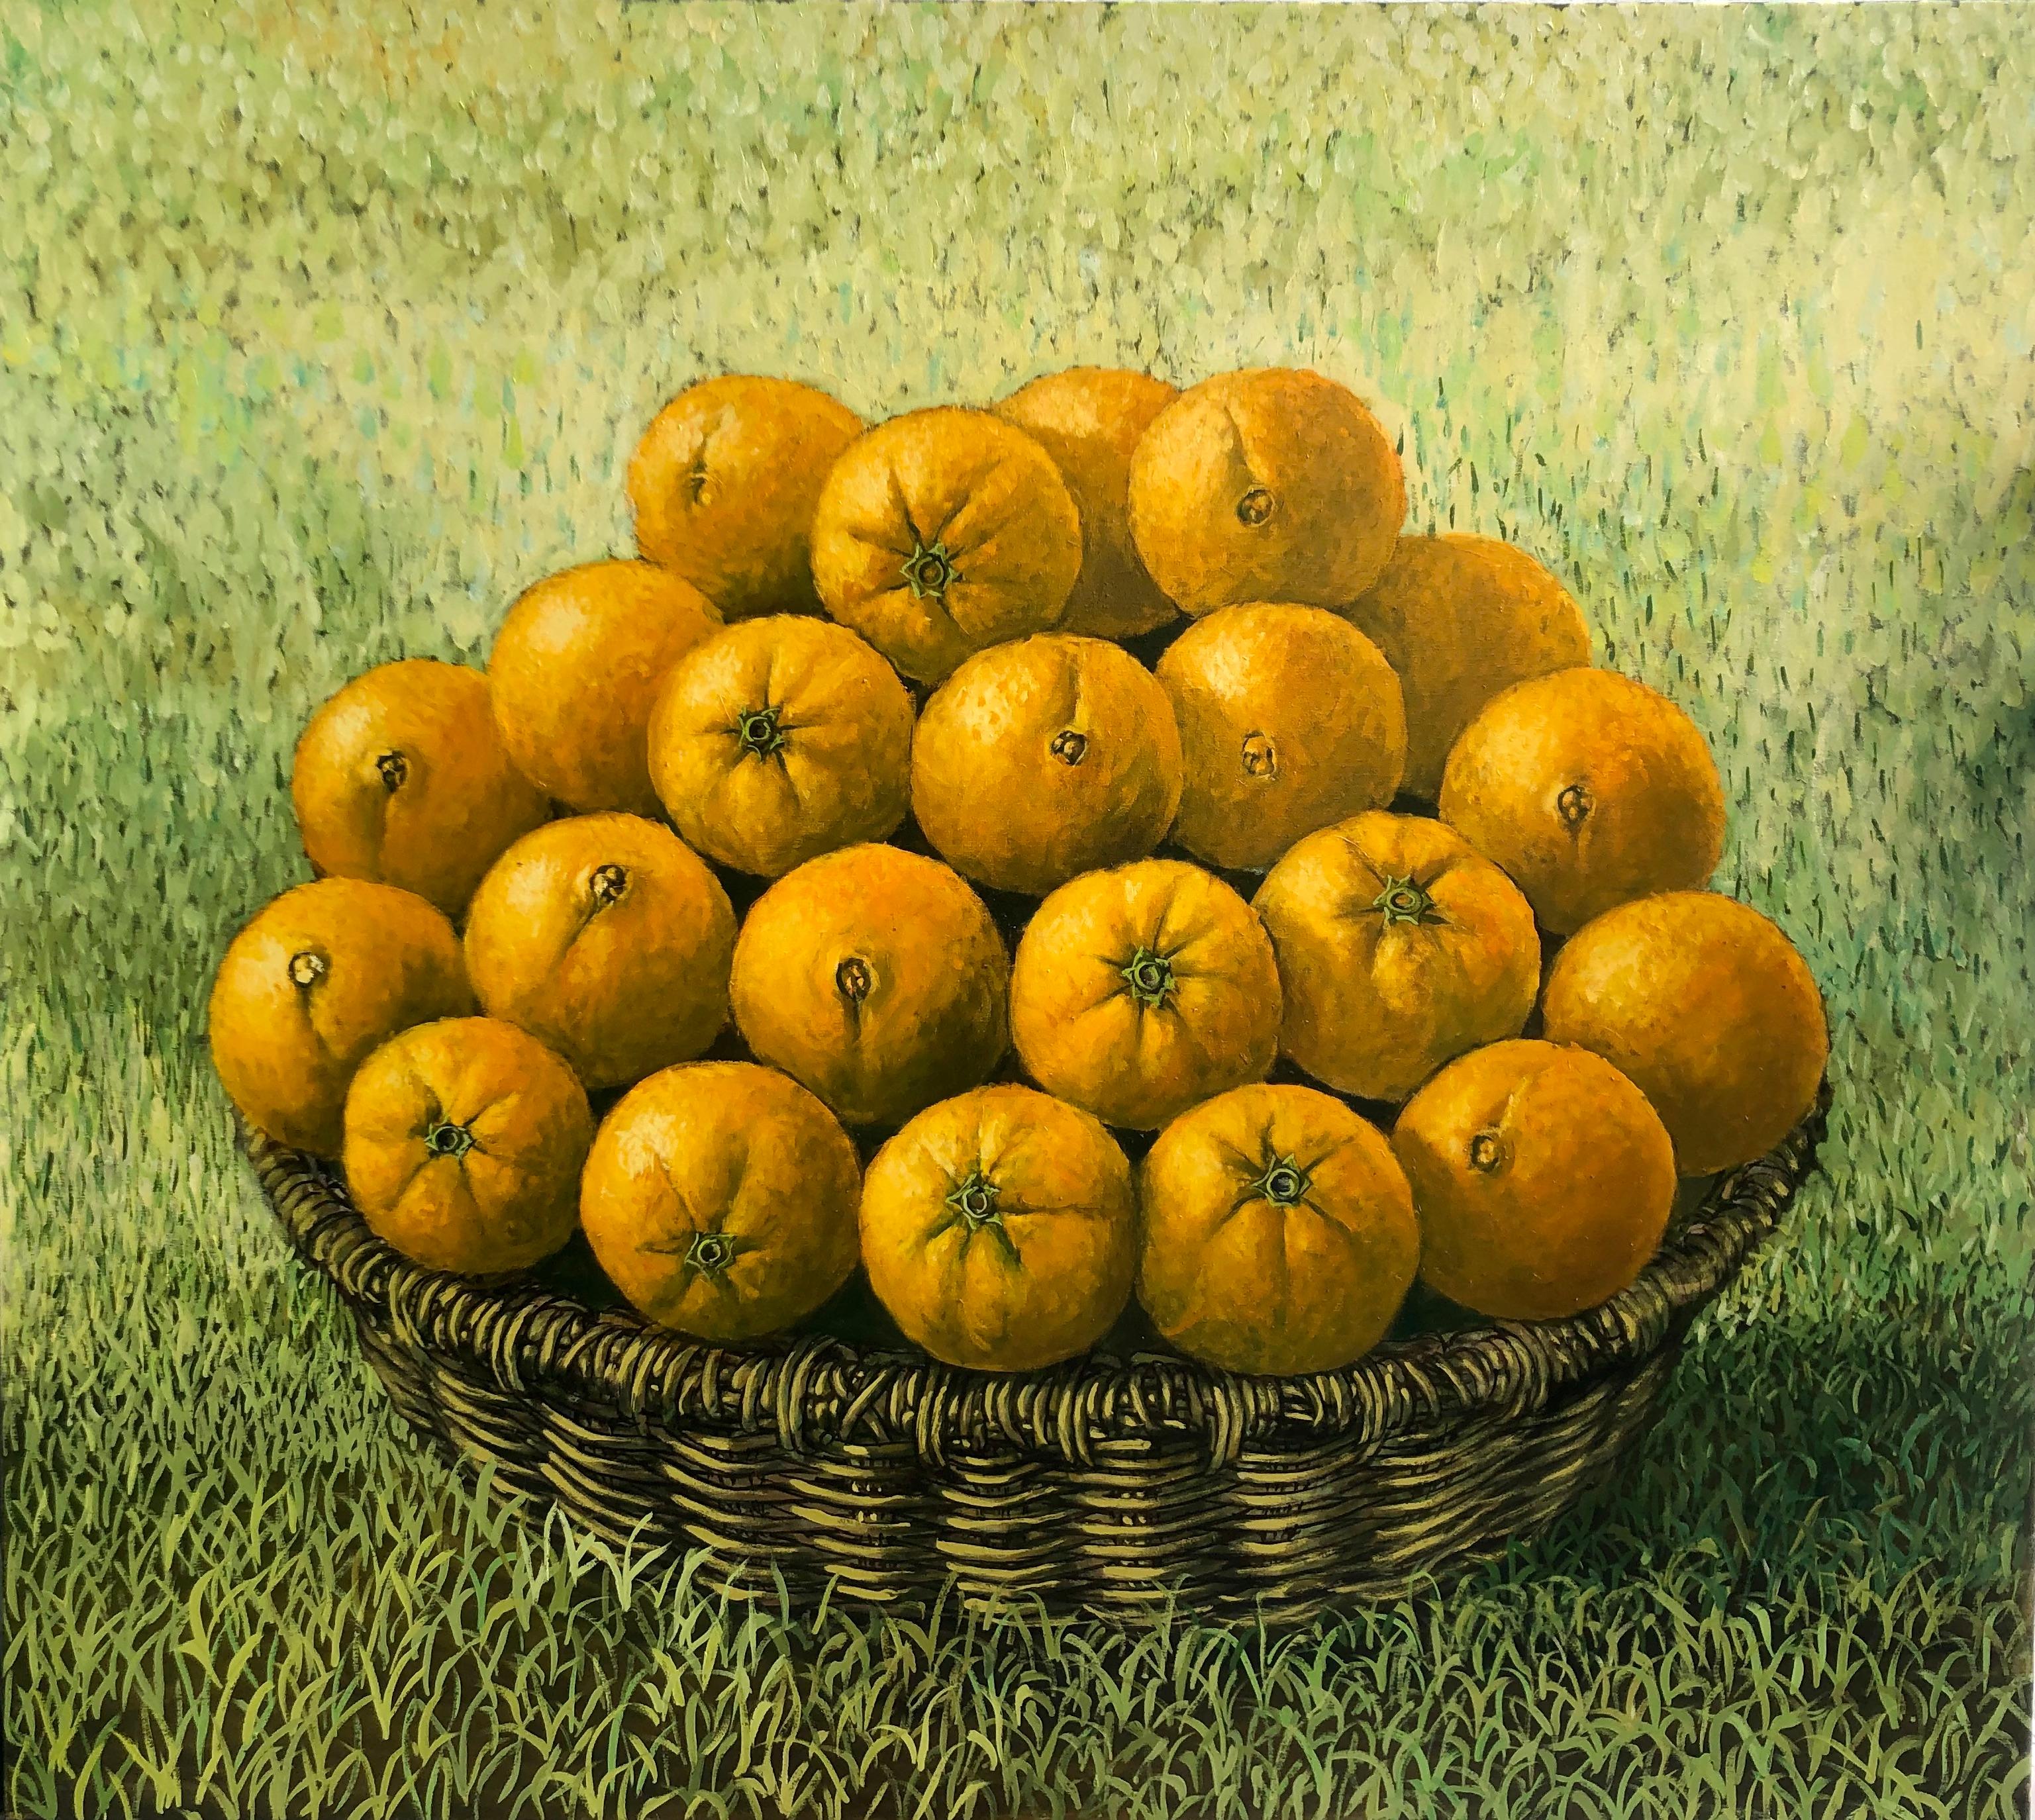 Figurative Painting Rafael Saldarriaga -  Les oranges dans le panier  